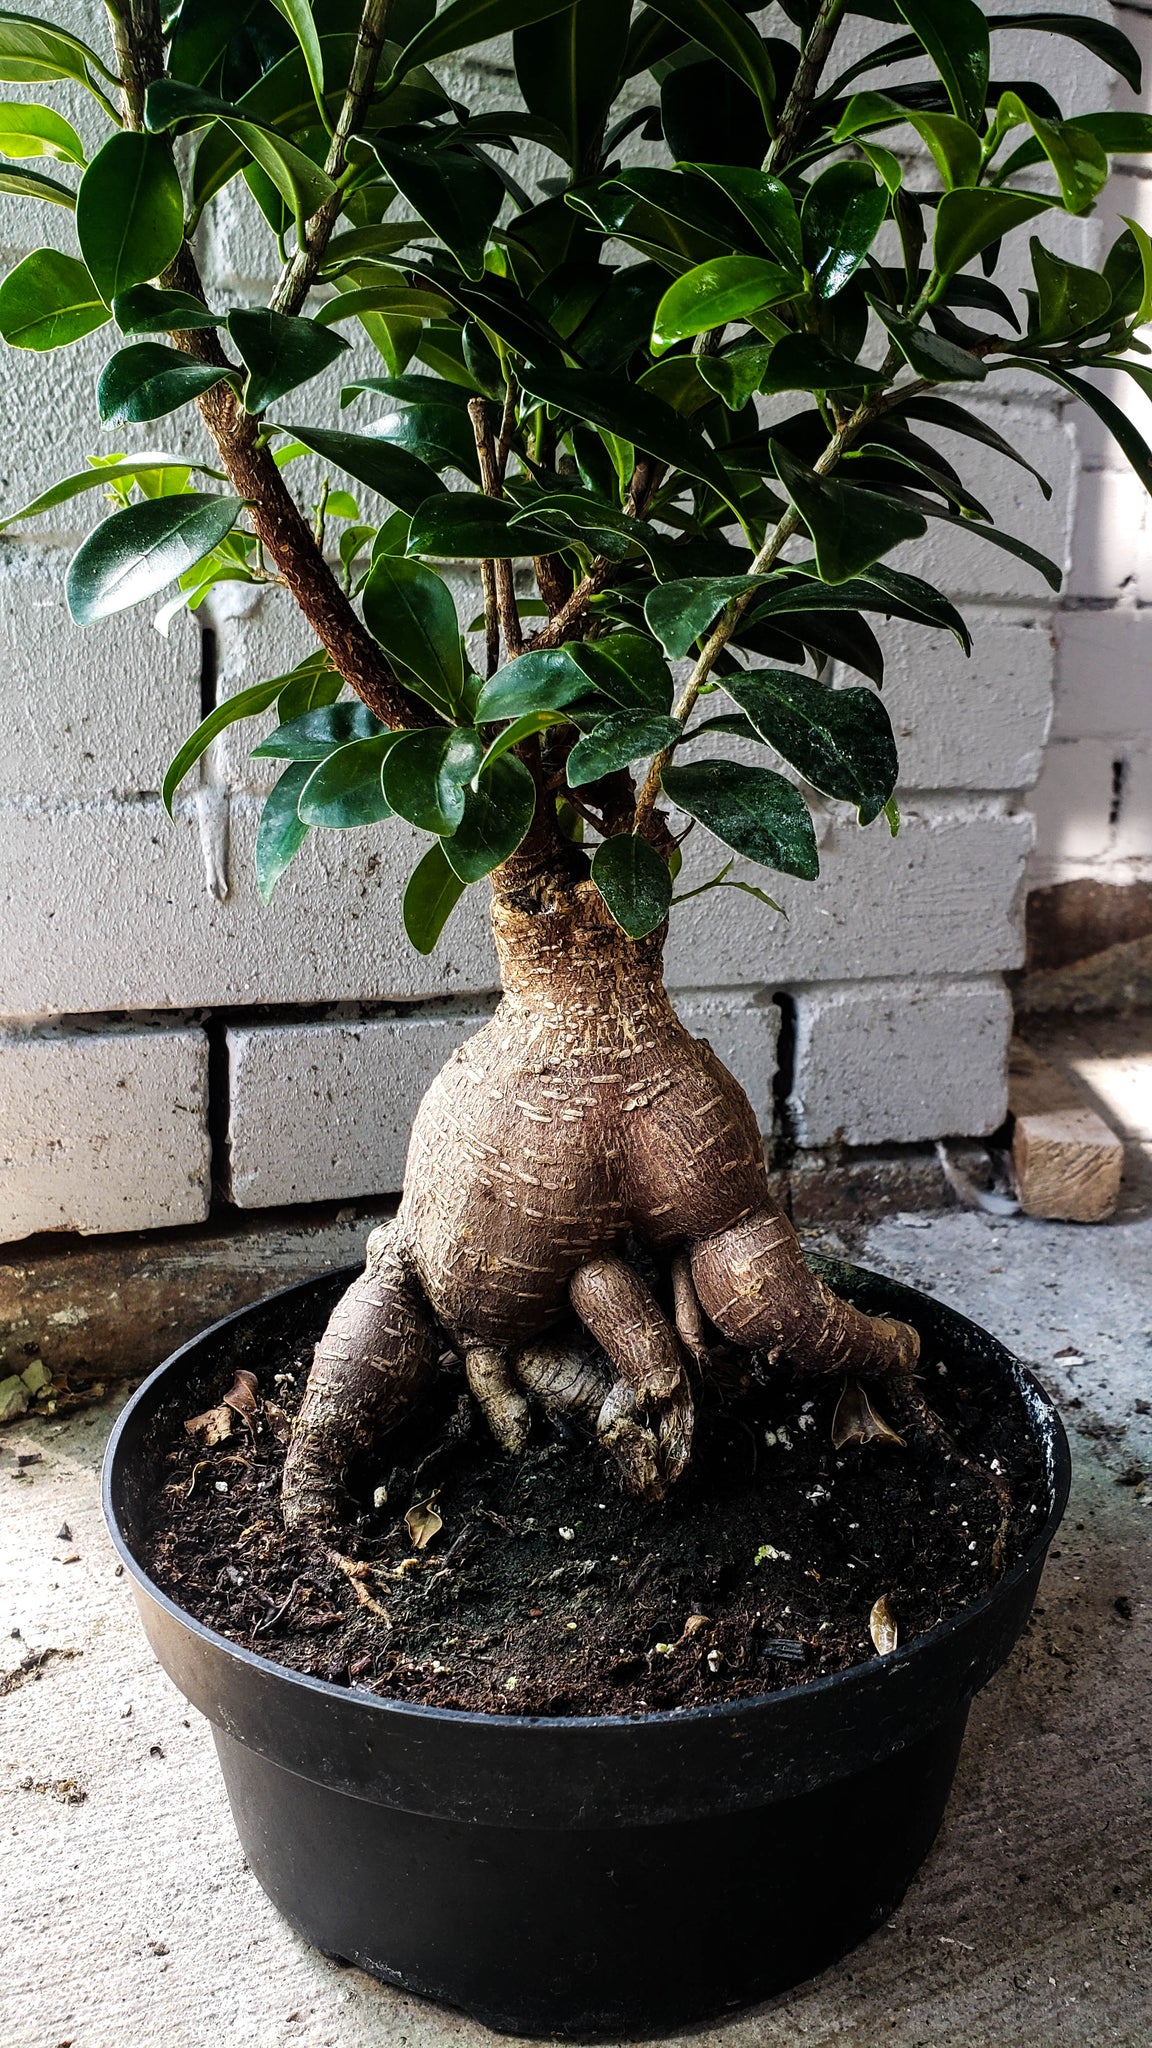 P5: Bonsai Tree (Ginseng Ficus)